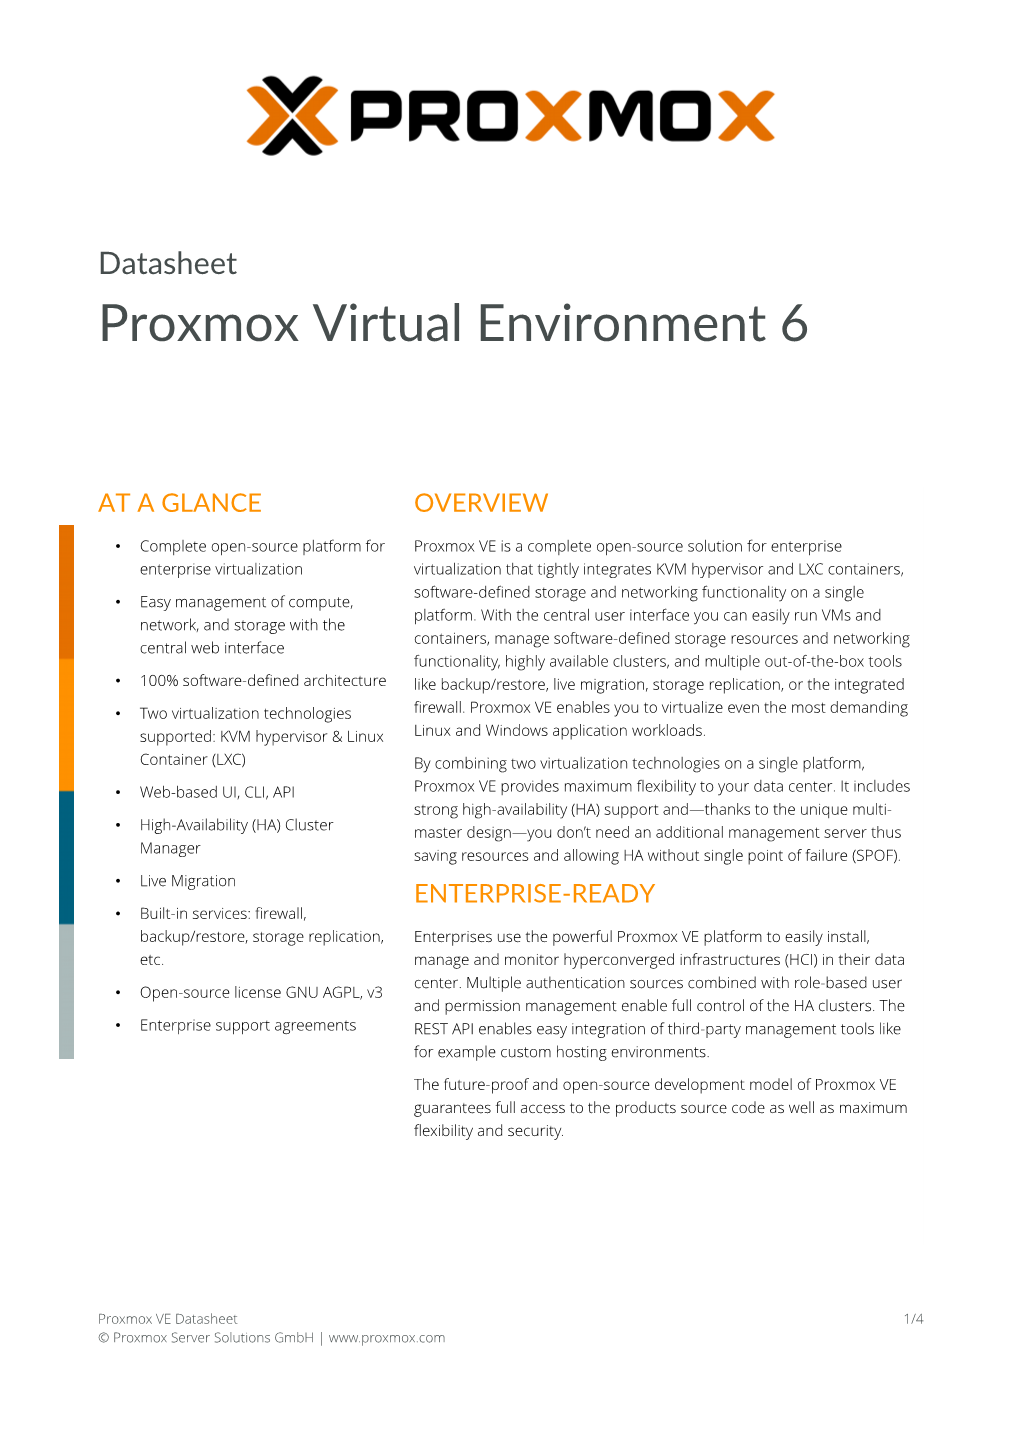 Proxmox VE Datasheet 1/4 © Proxmox Server Solutions Gmbh | KEY FEATURES